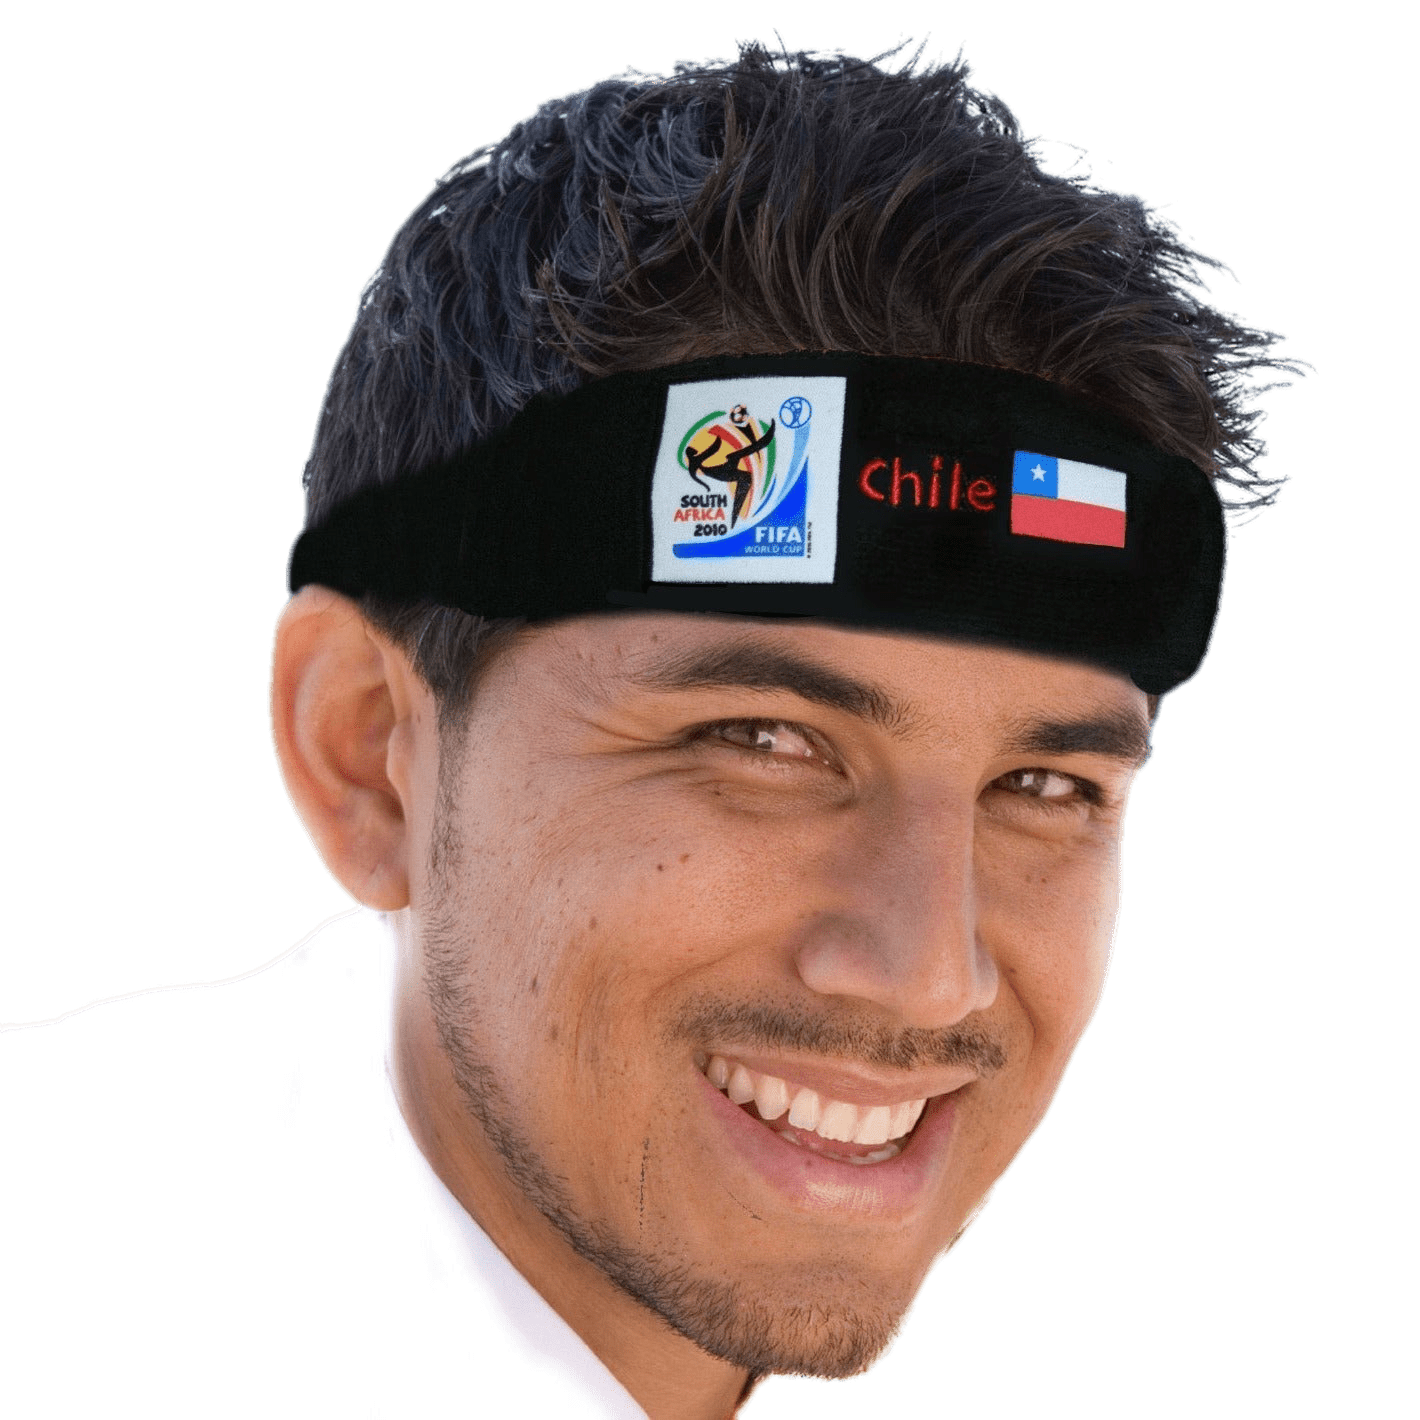 Retro Soccer Fan Headband - 29 Countries 2010 games - VIP Extensions